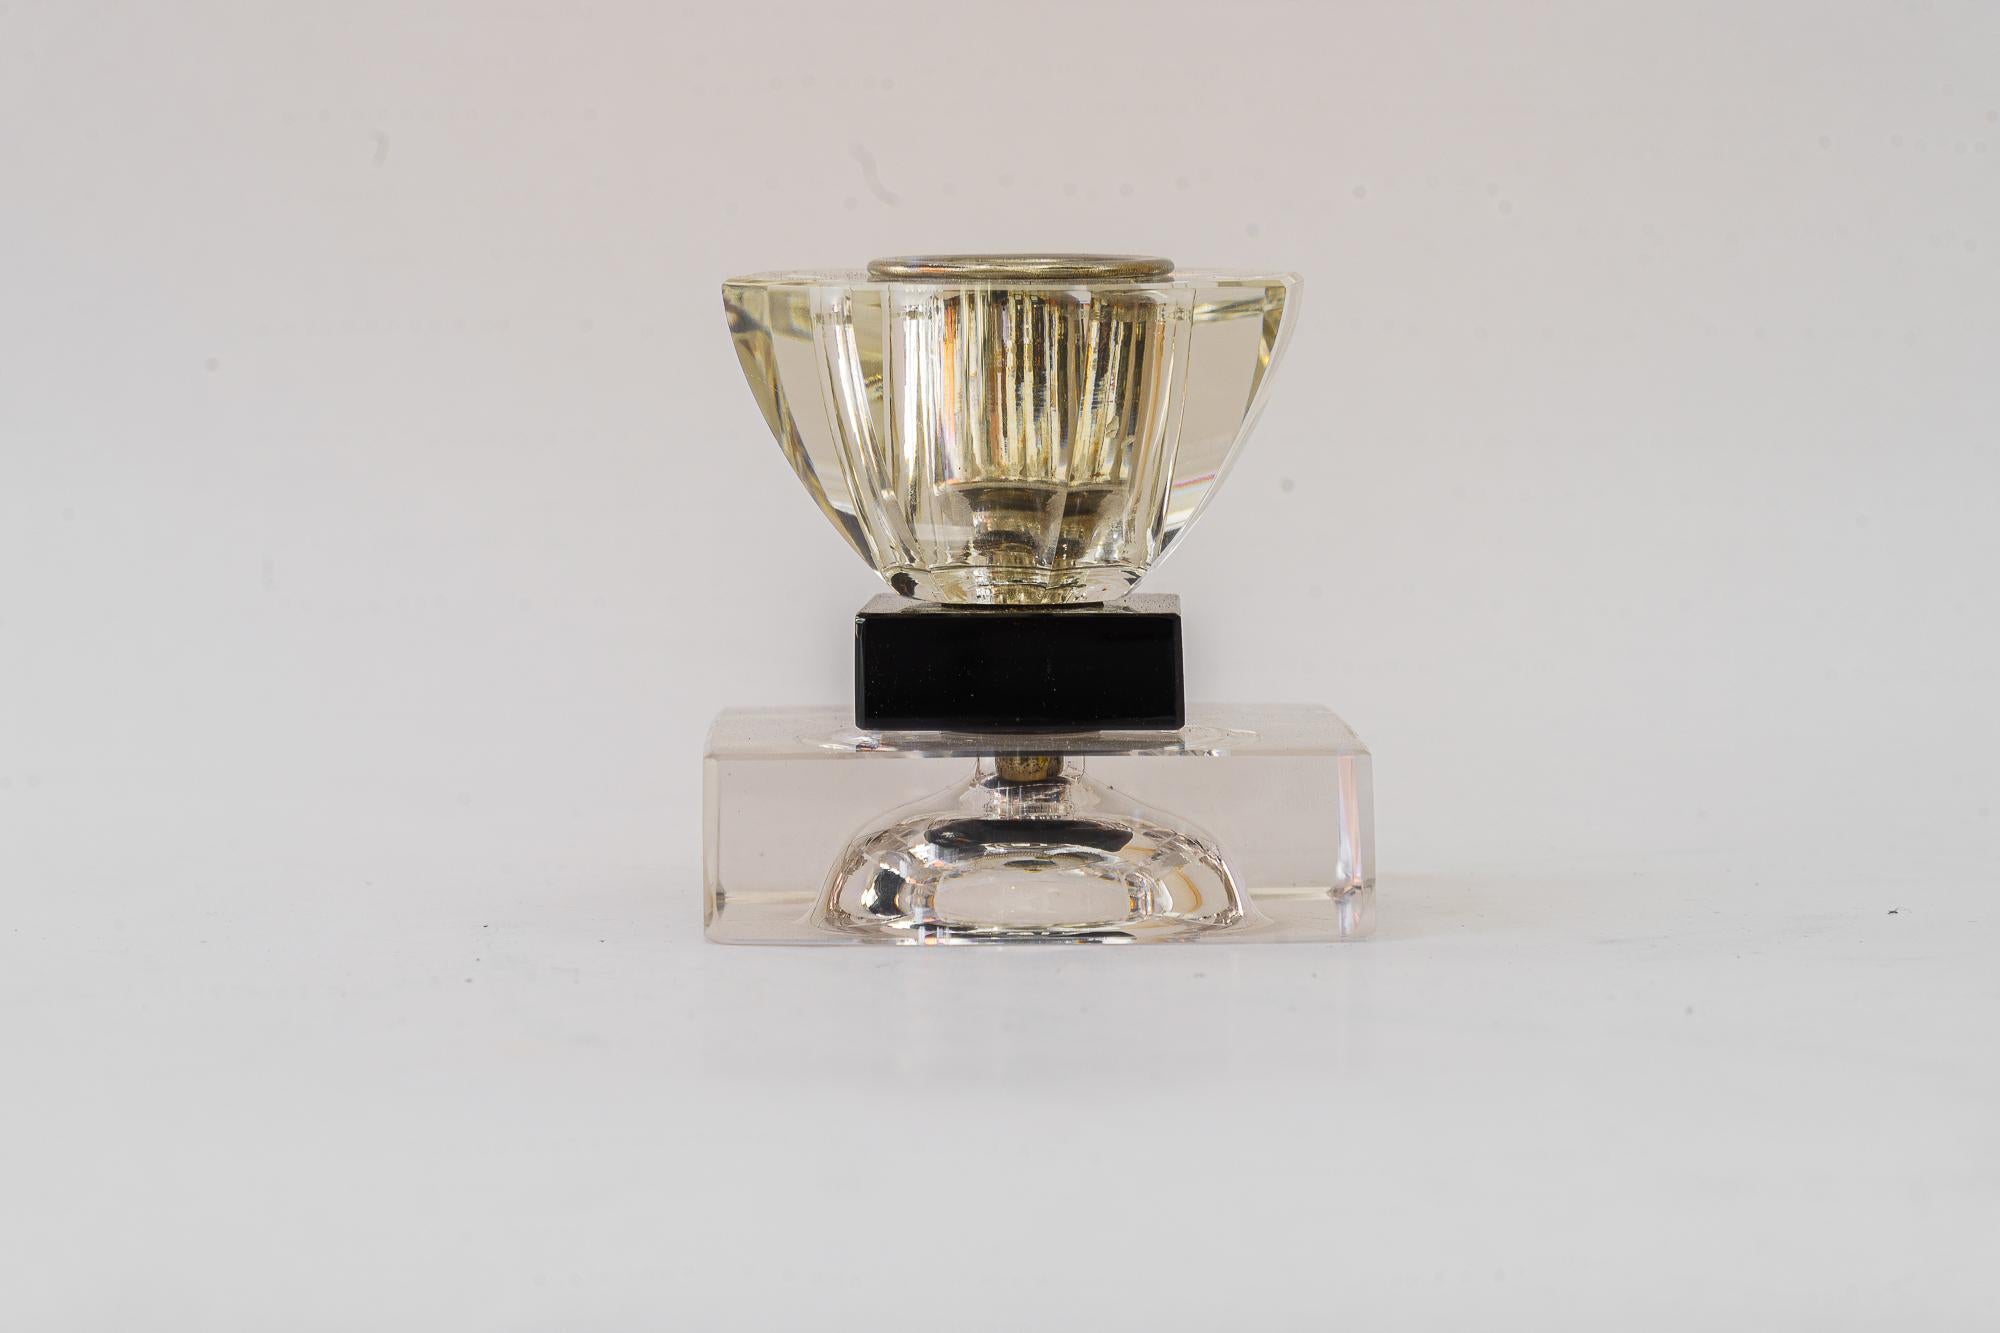 Art Deco Bakalowits candle holder vienna around 1920s
Transparent glass and black glass
Brass nickel plated
Original condition